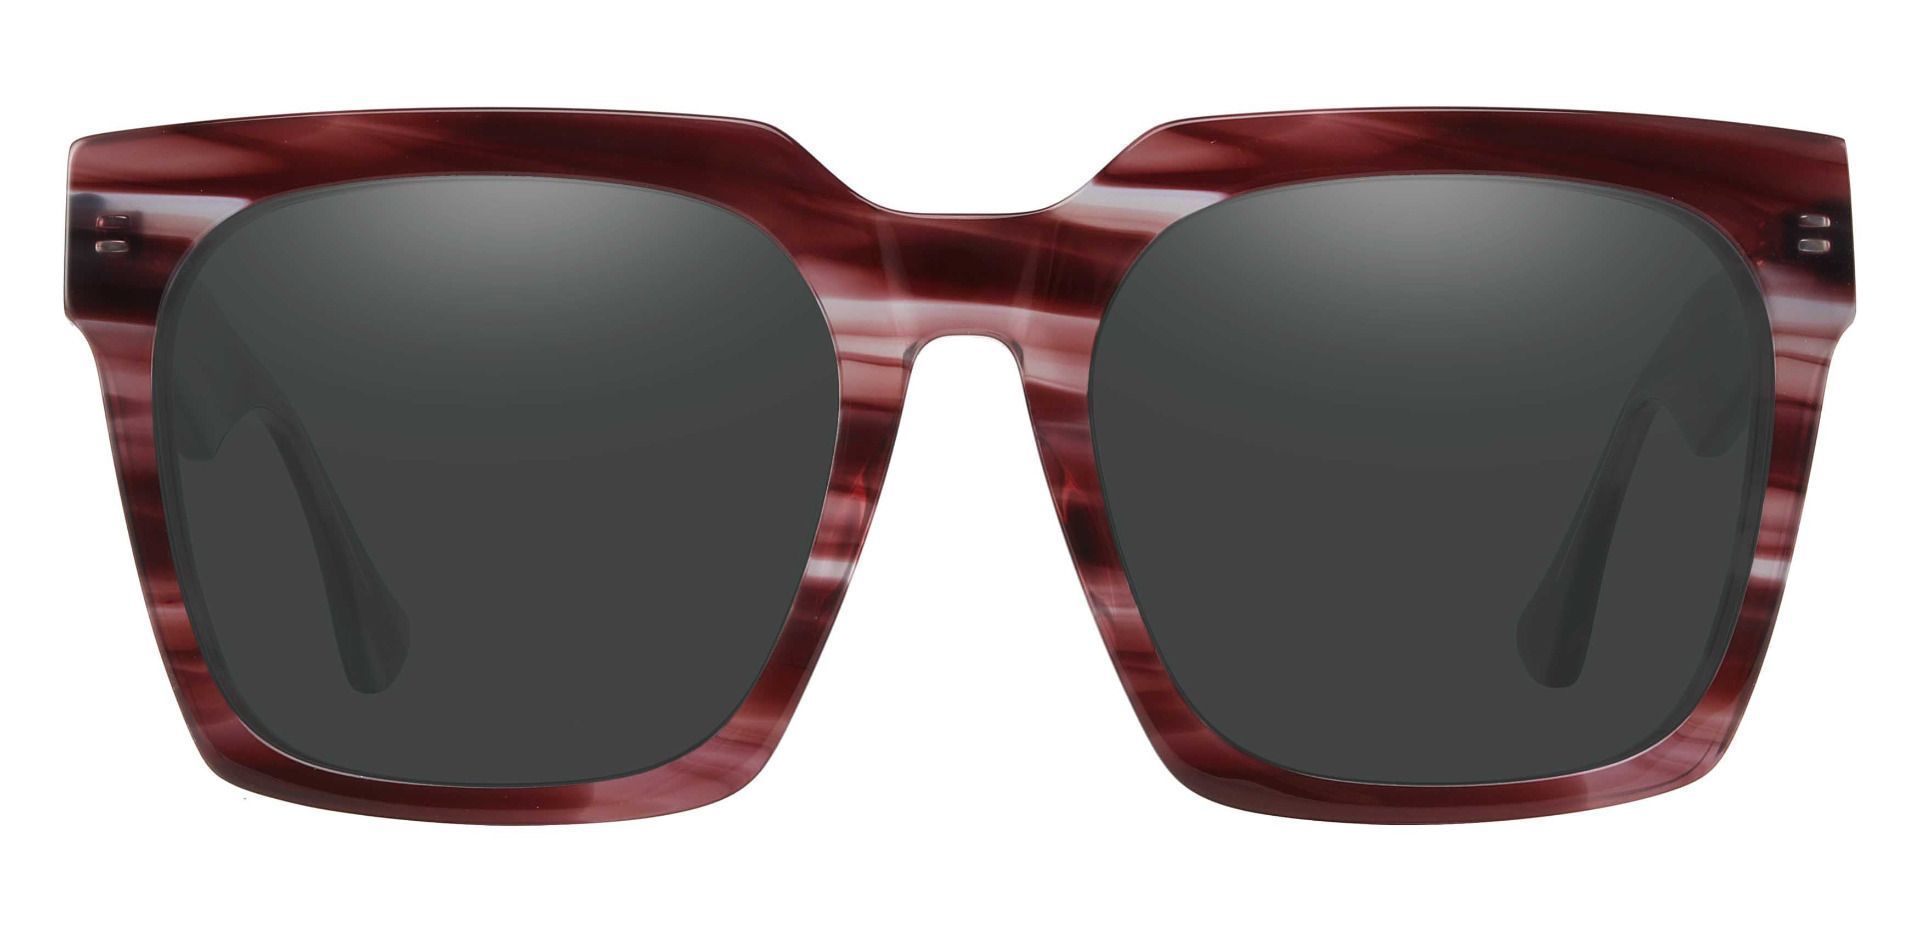 Harlan Square Prescription Sunglasses - Striped Frame With Gray Lenses	